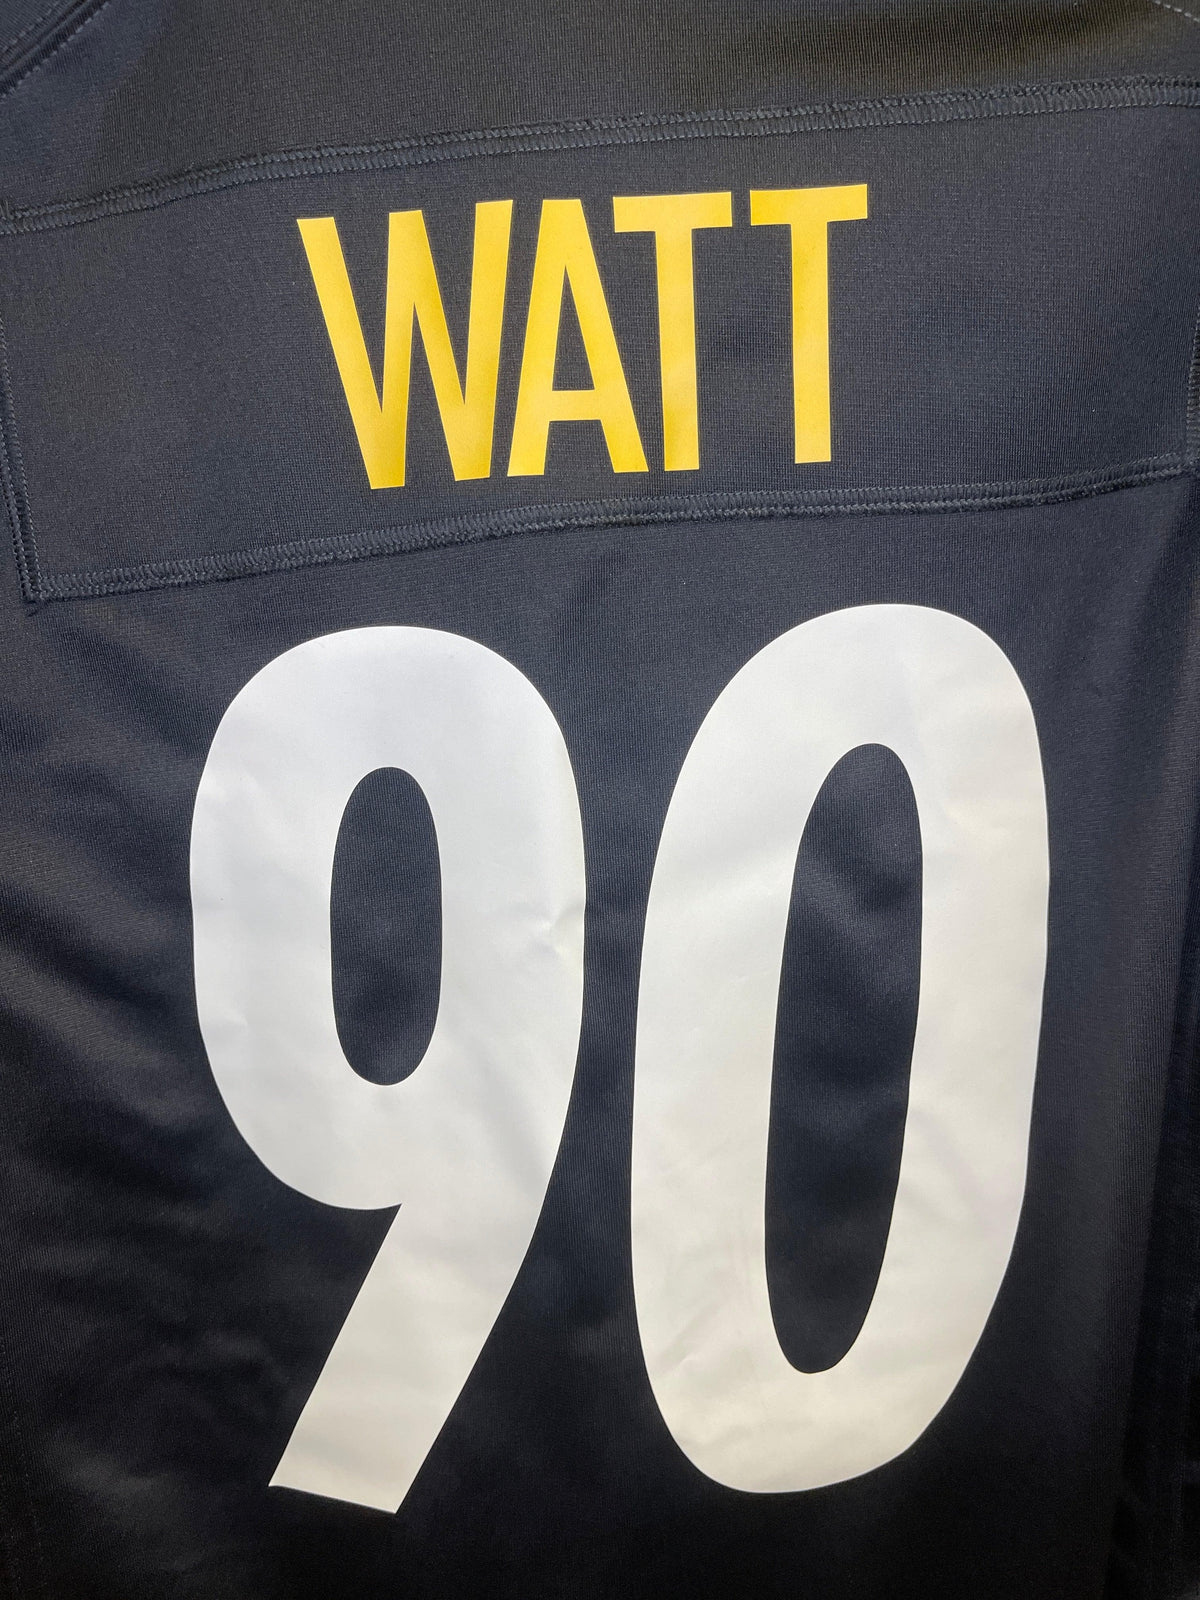 NFL Pittsburgh Steelers T J Watt #90 Game Jersey Men's Large NWT